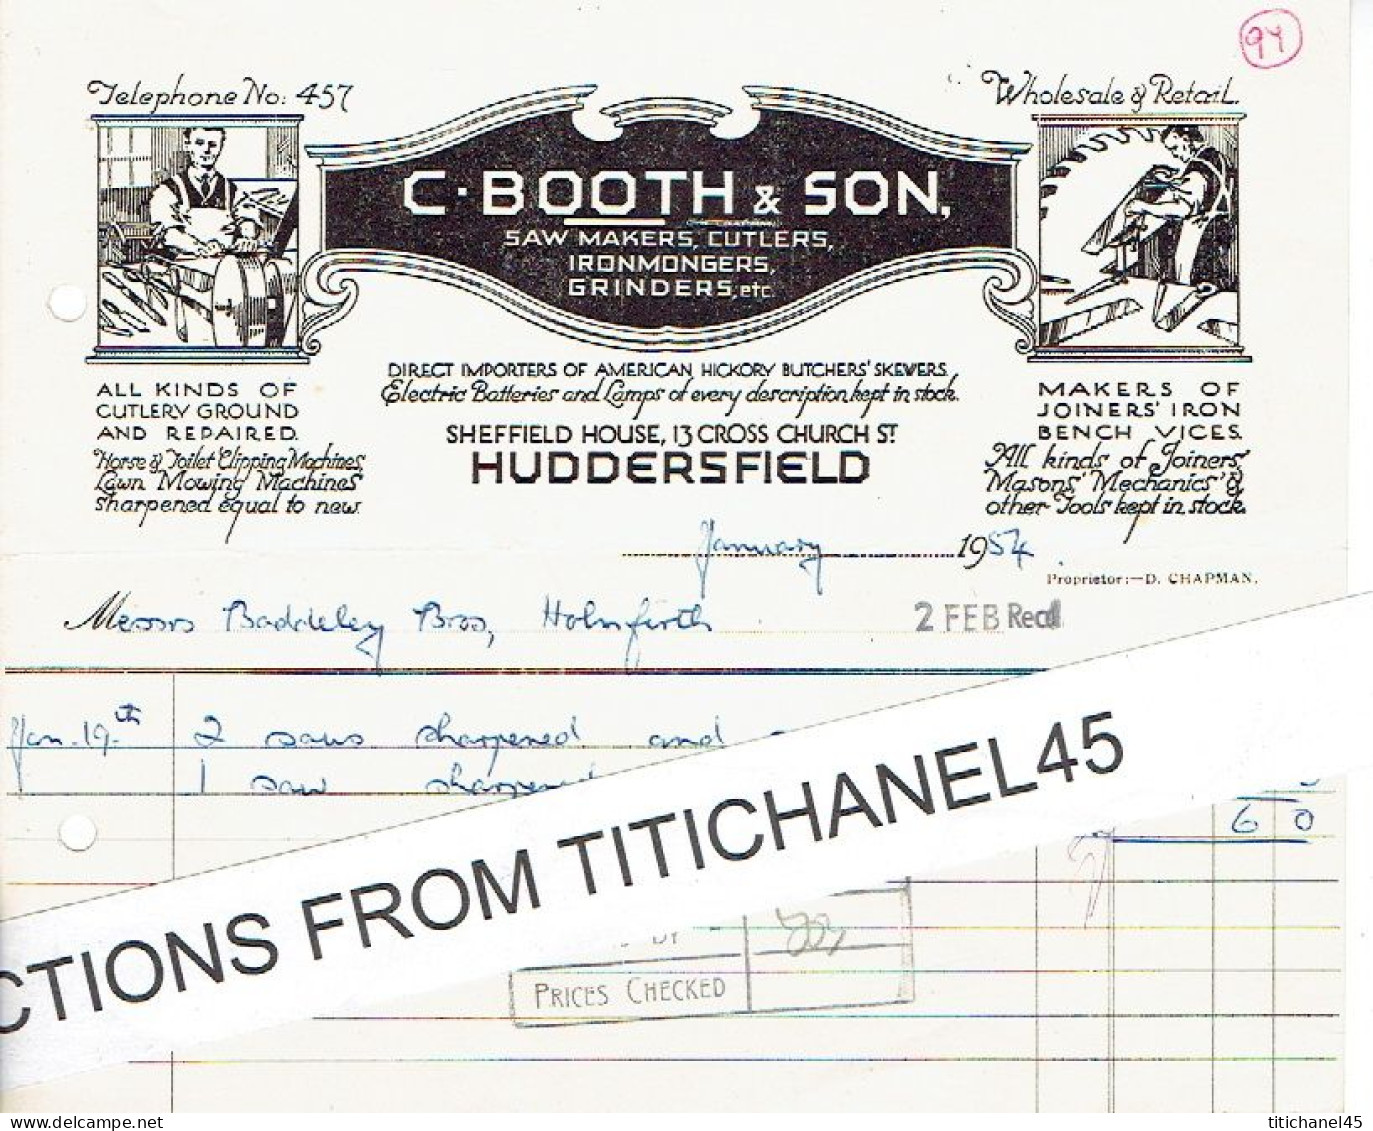 1954 HUDDERSFIELD - Invoice From C. BOOTH & SON - Saw Makers, Cutlers, Ironmongers, Grinders... - Verenigd-Koninkrijk